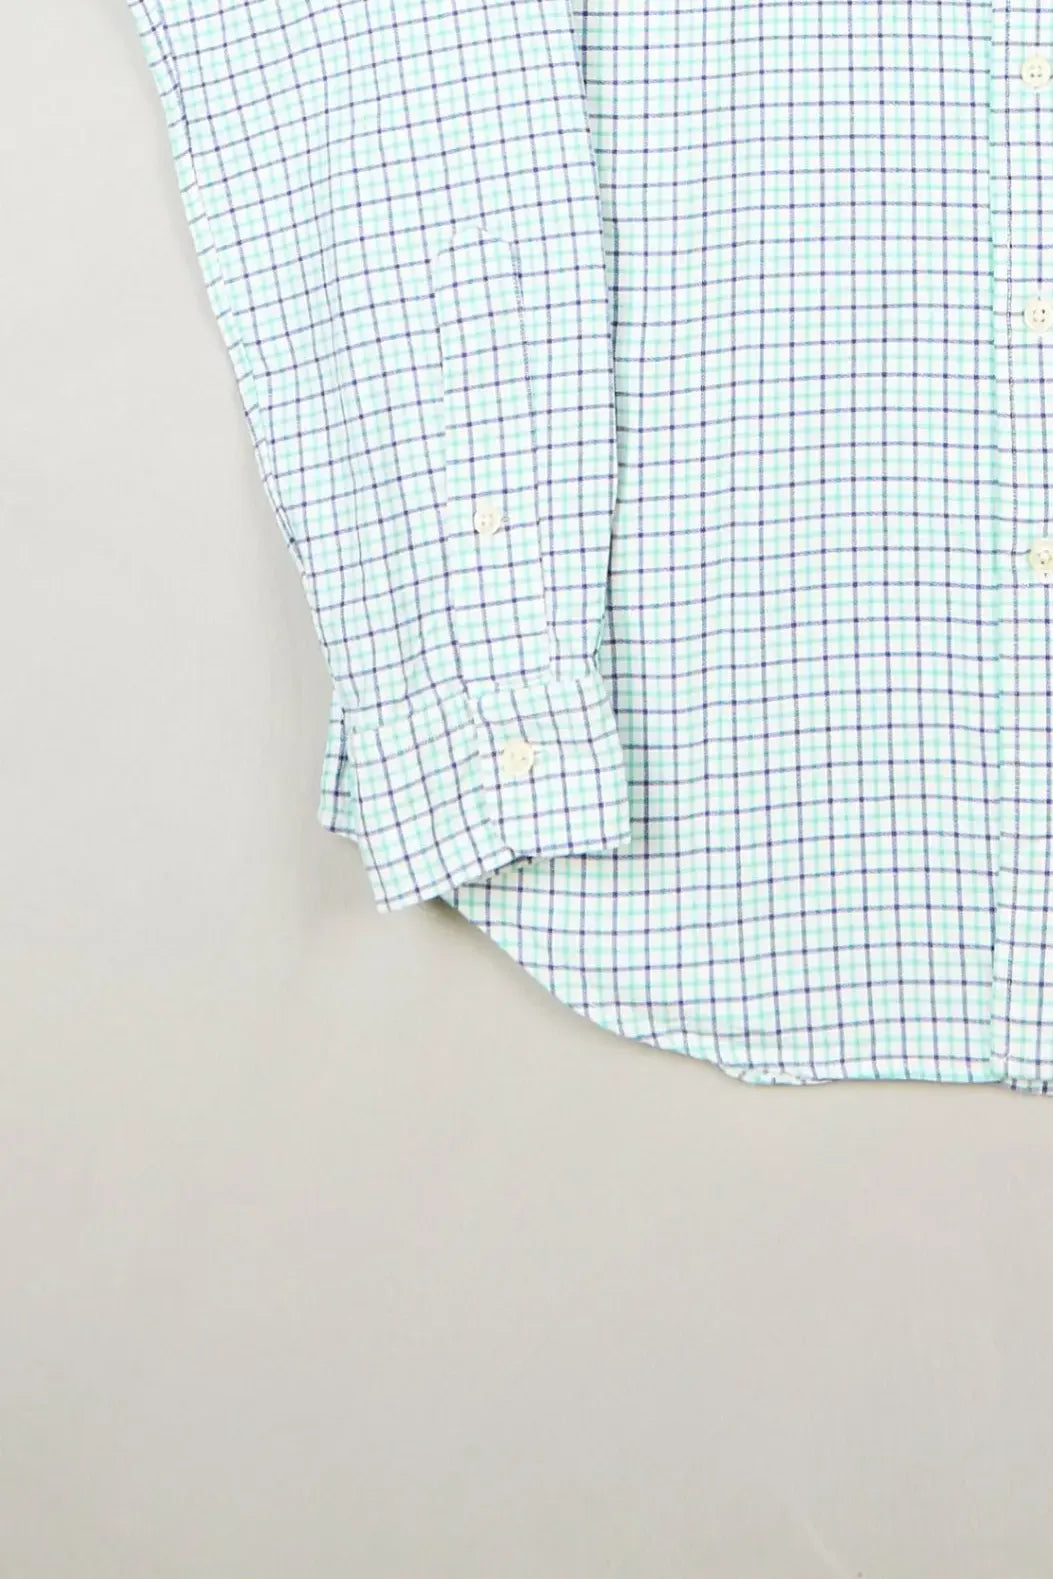 Ralph Lauren - Shirt (S) Bottom Left